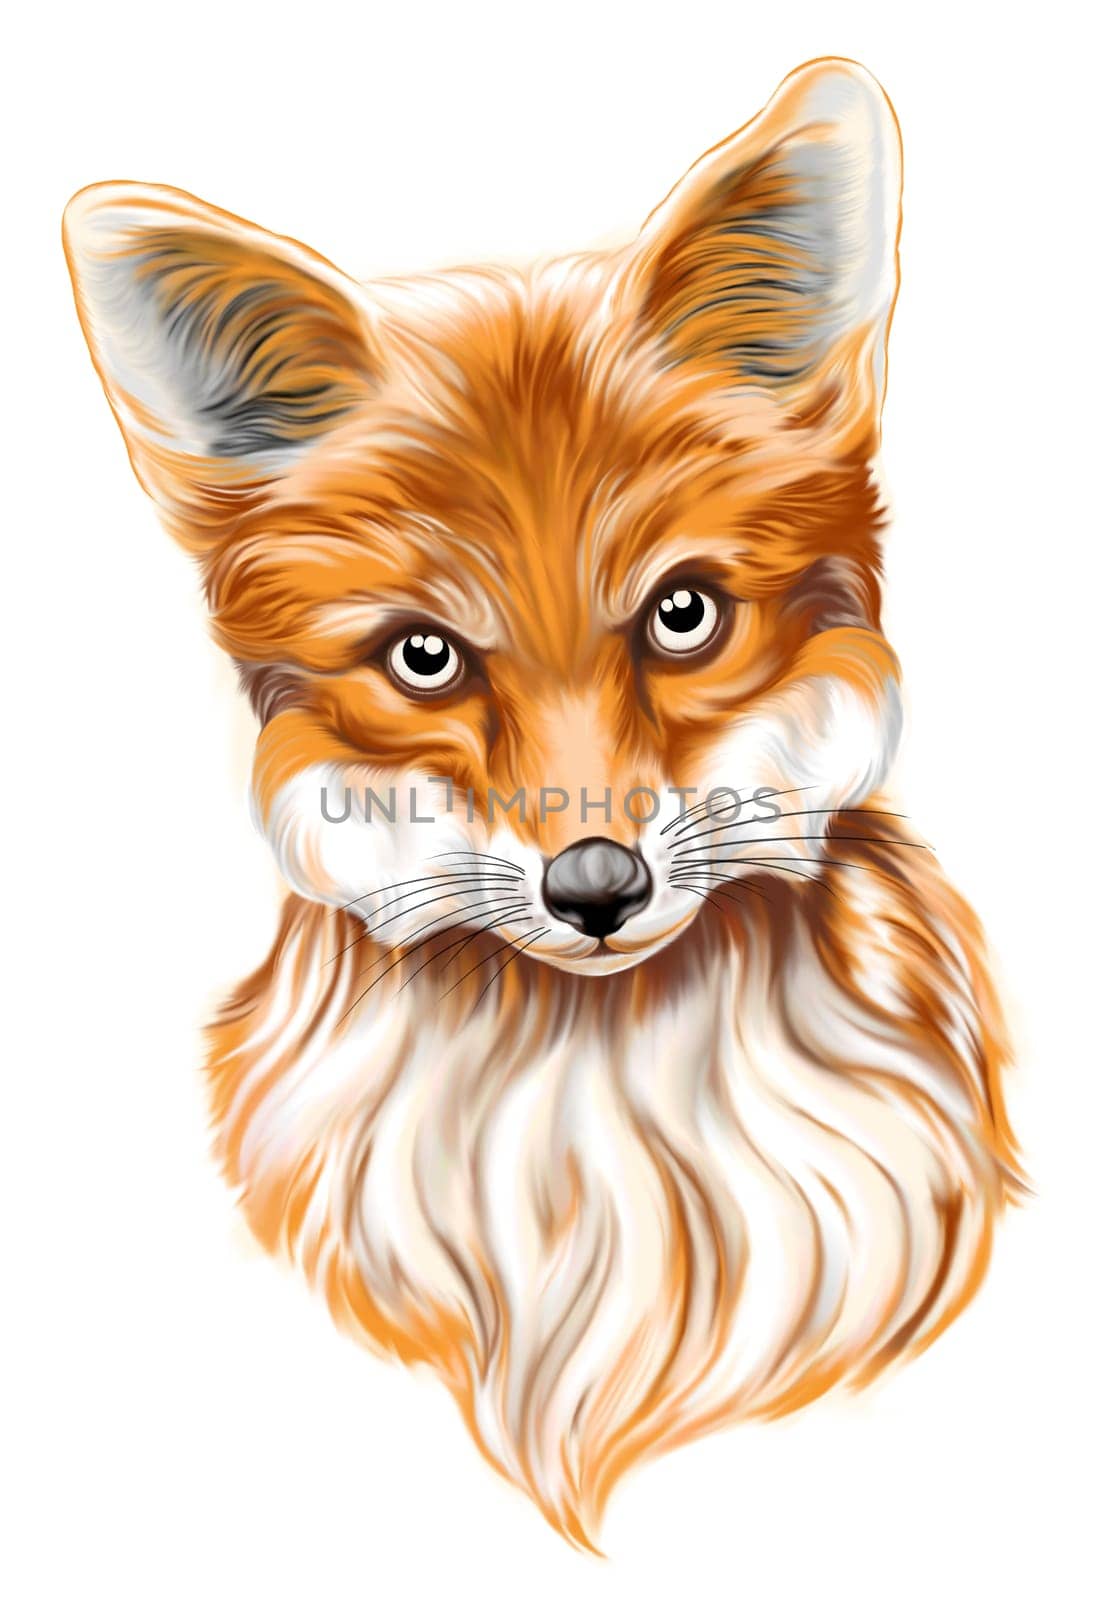 Digital drawing of a temperamental fox wildlife face